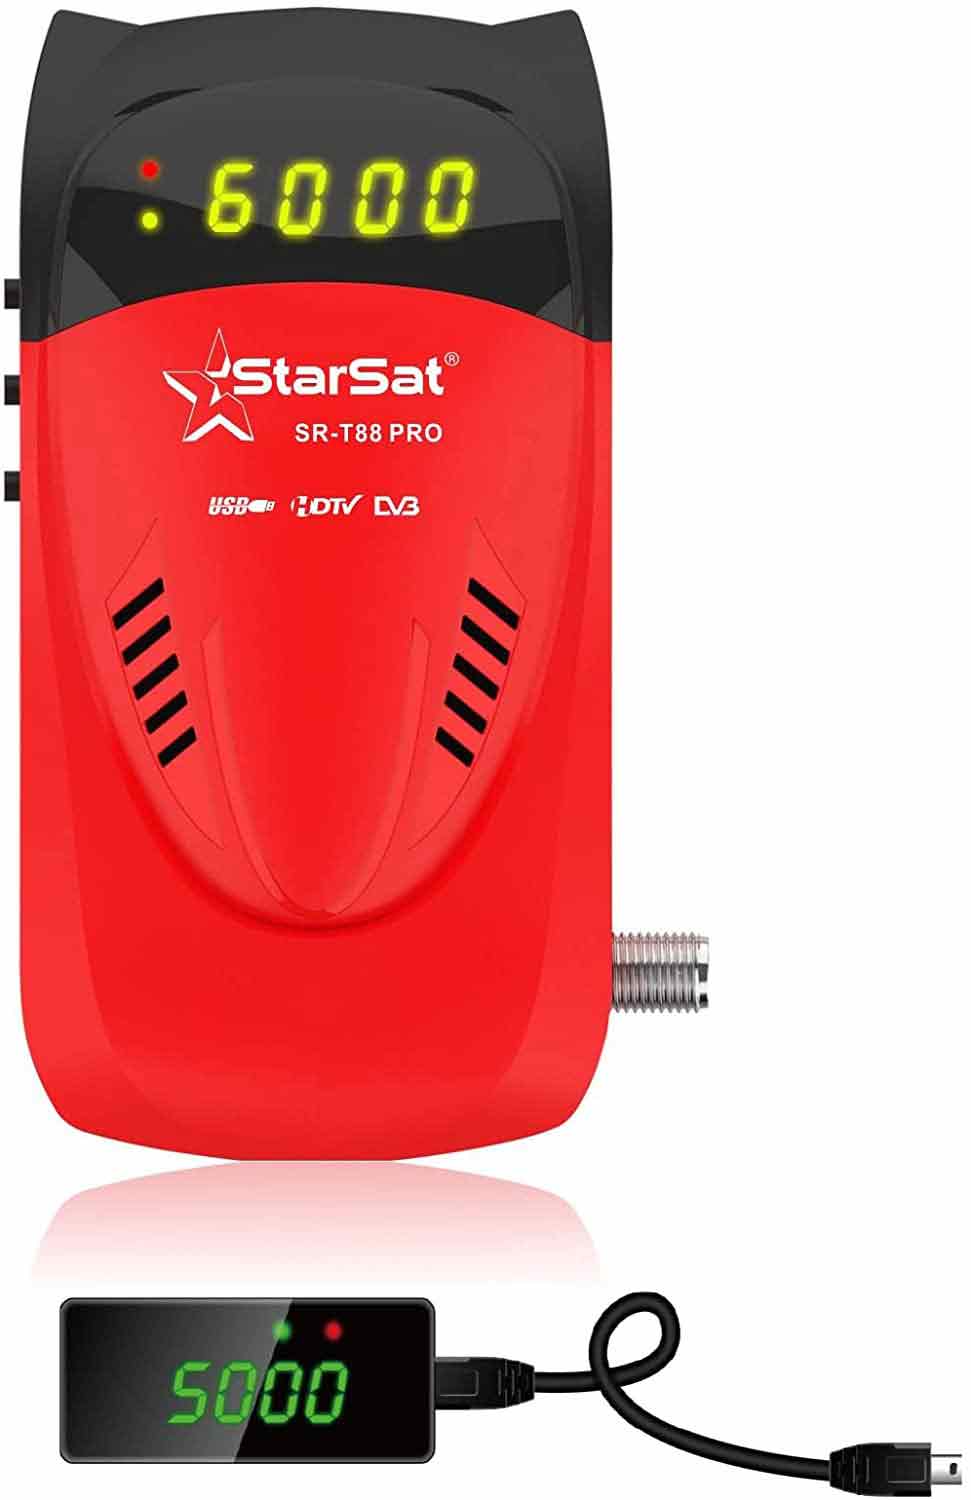 Starsat SR-T88 Pro Digital Satellite Receiver